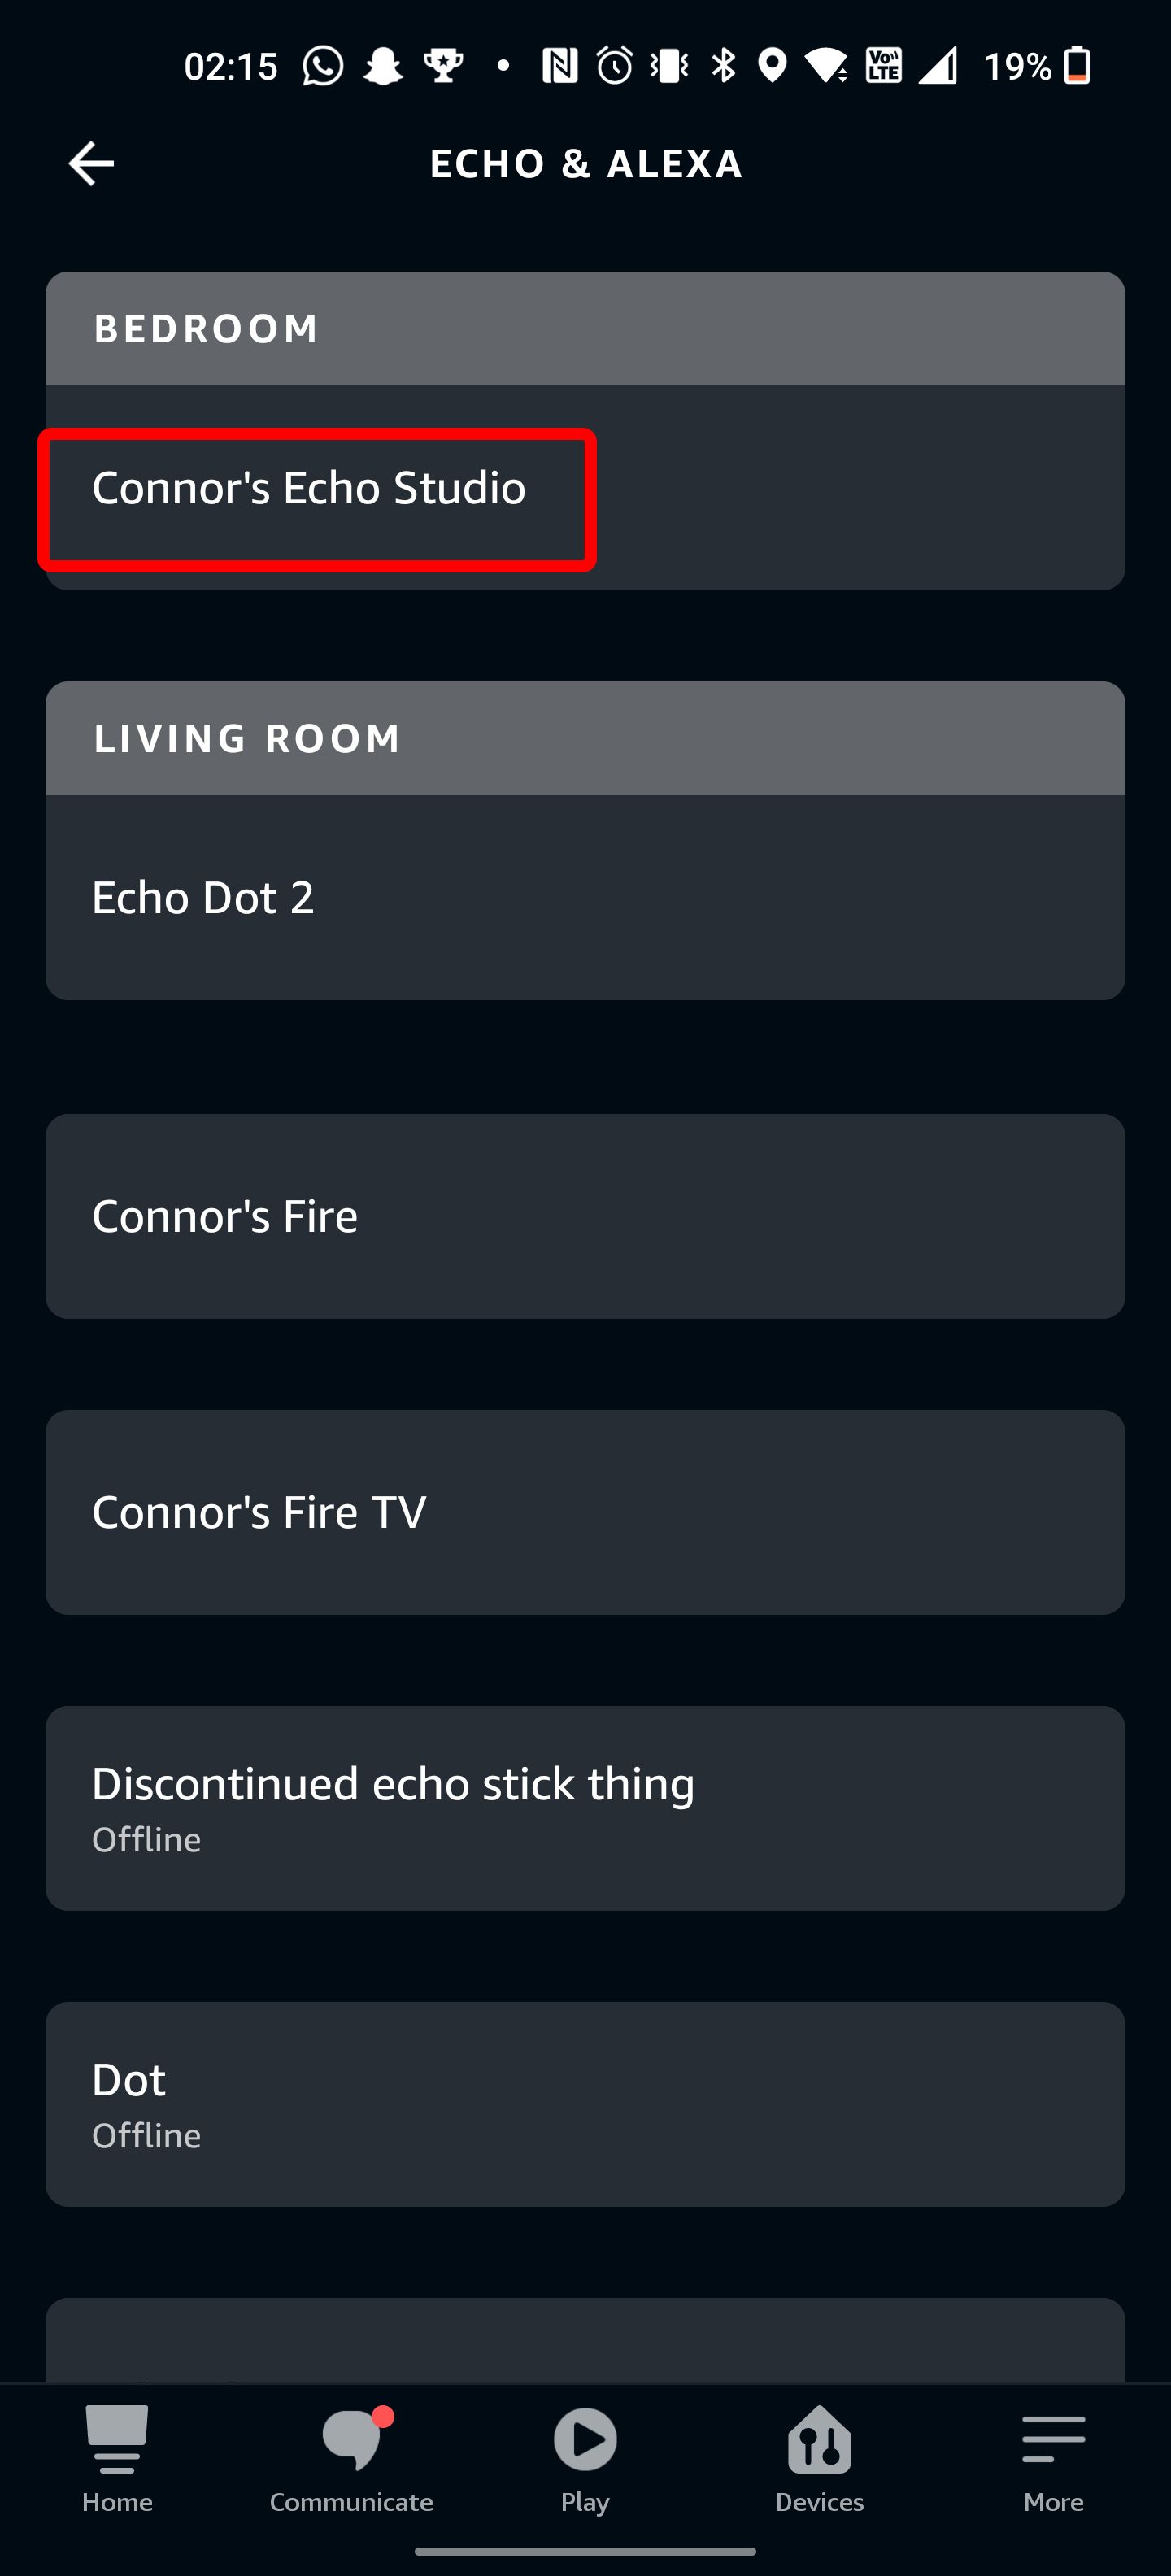 The Alexa app device selection menu.